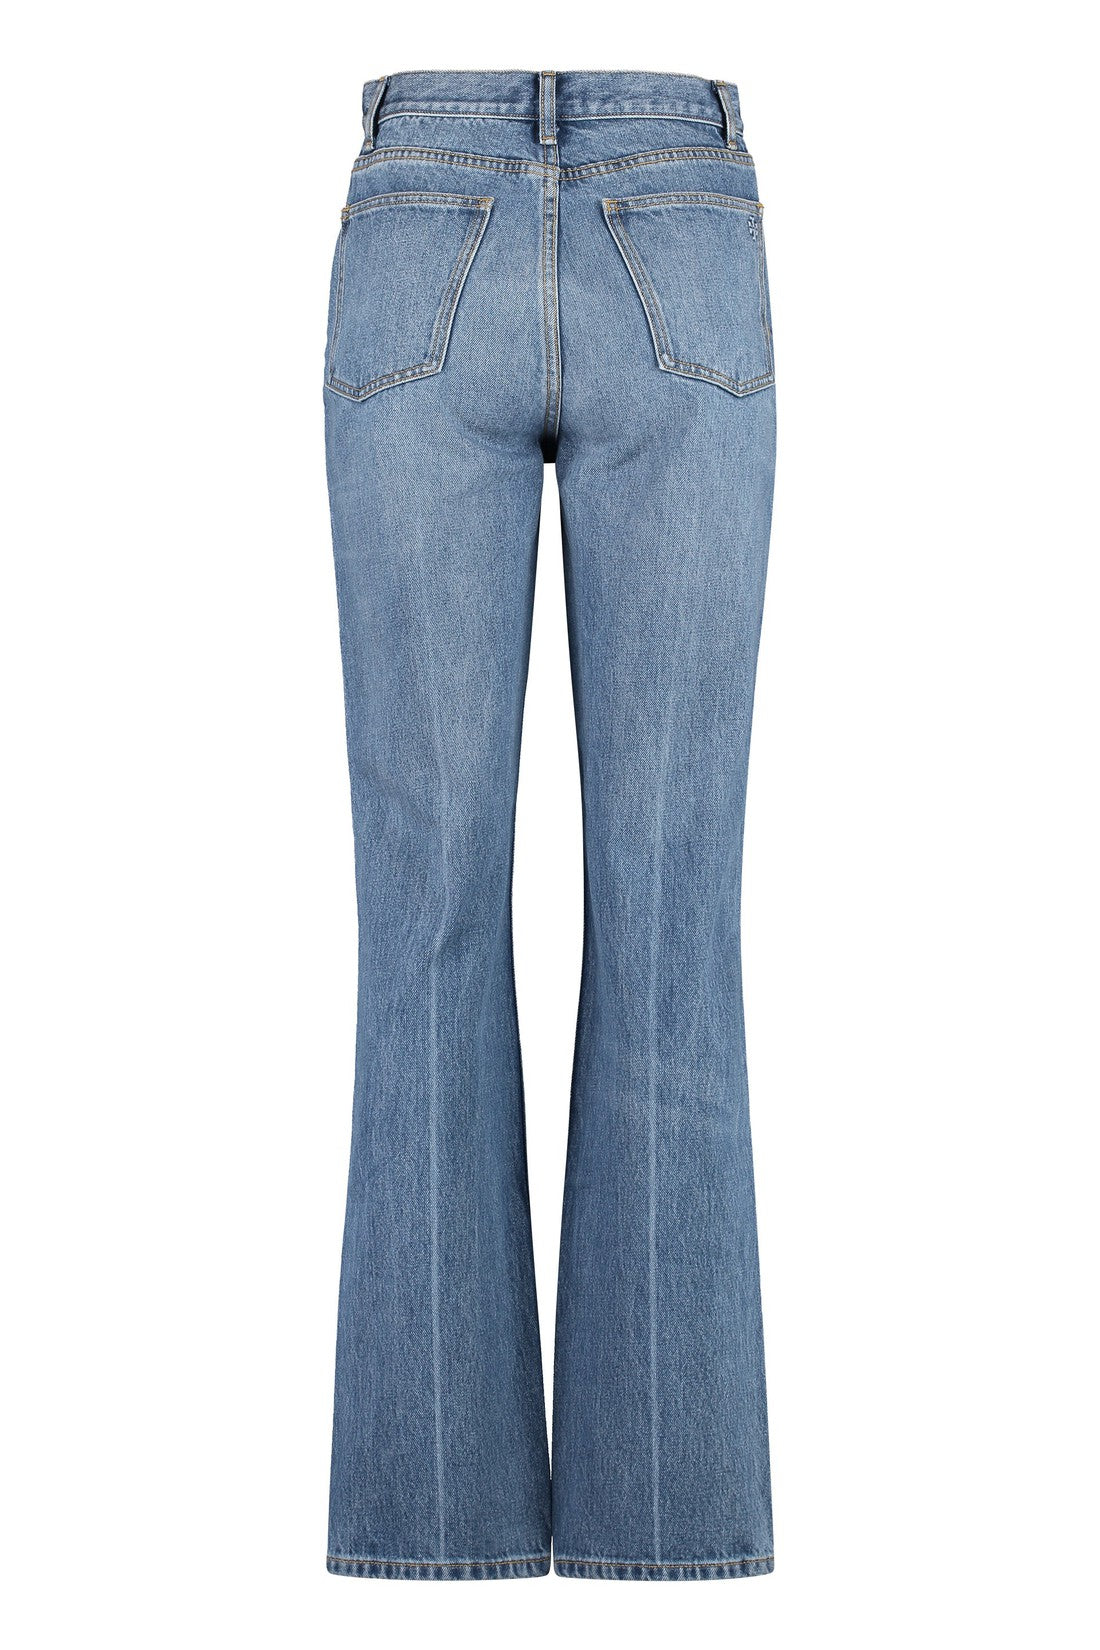 Tory Burch-OUTLET-SALE-5-pocket straight-leg jeans-ARCHIVIST